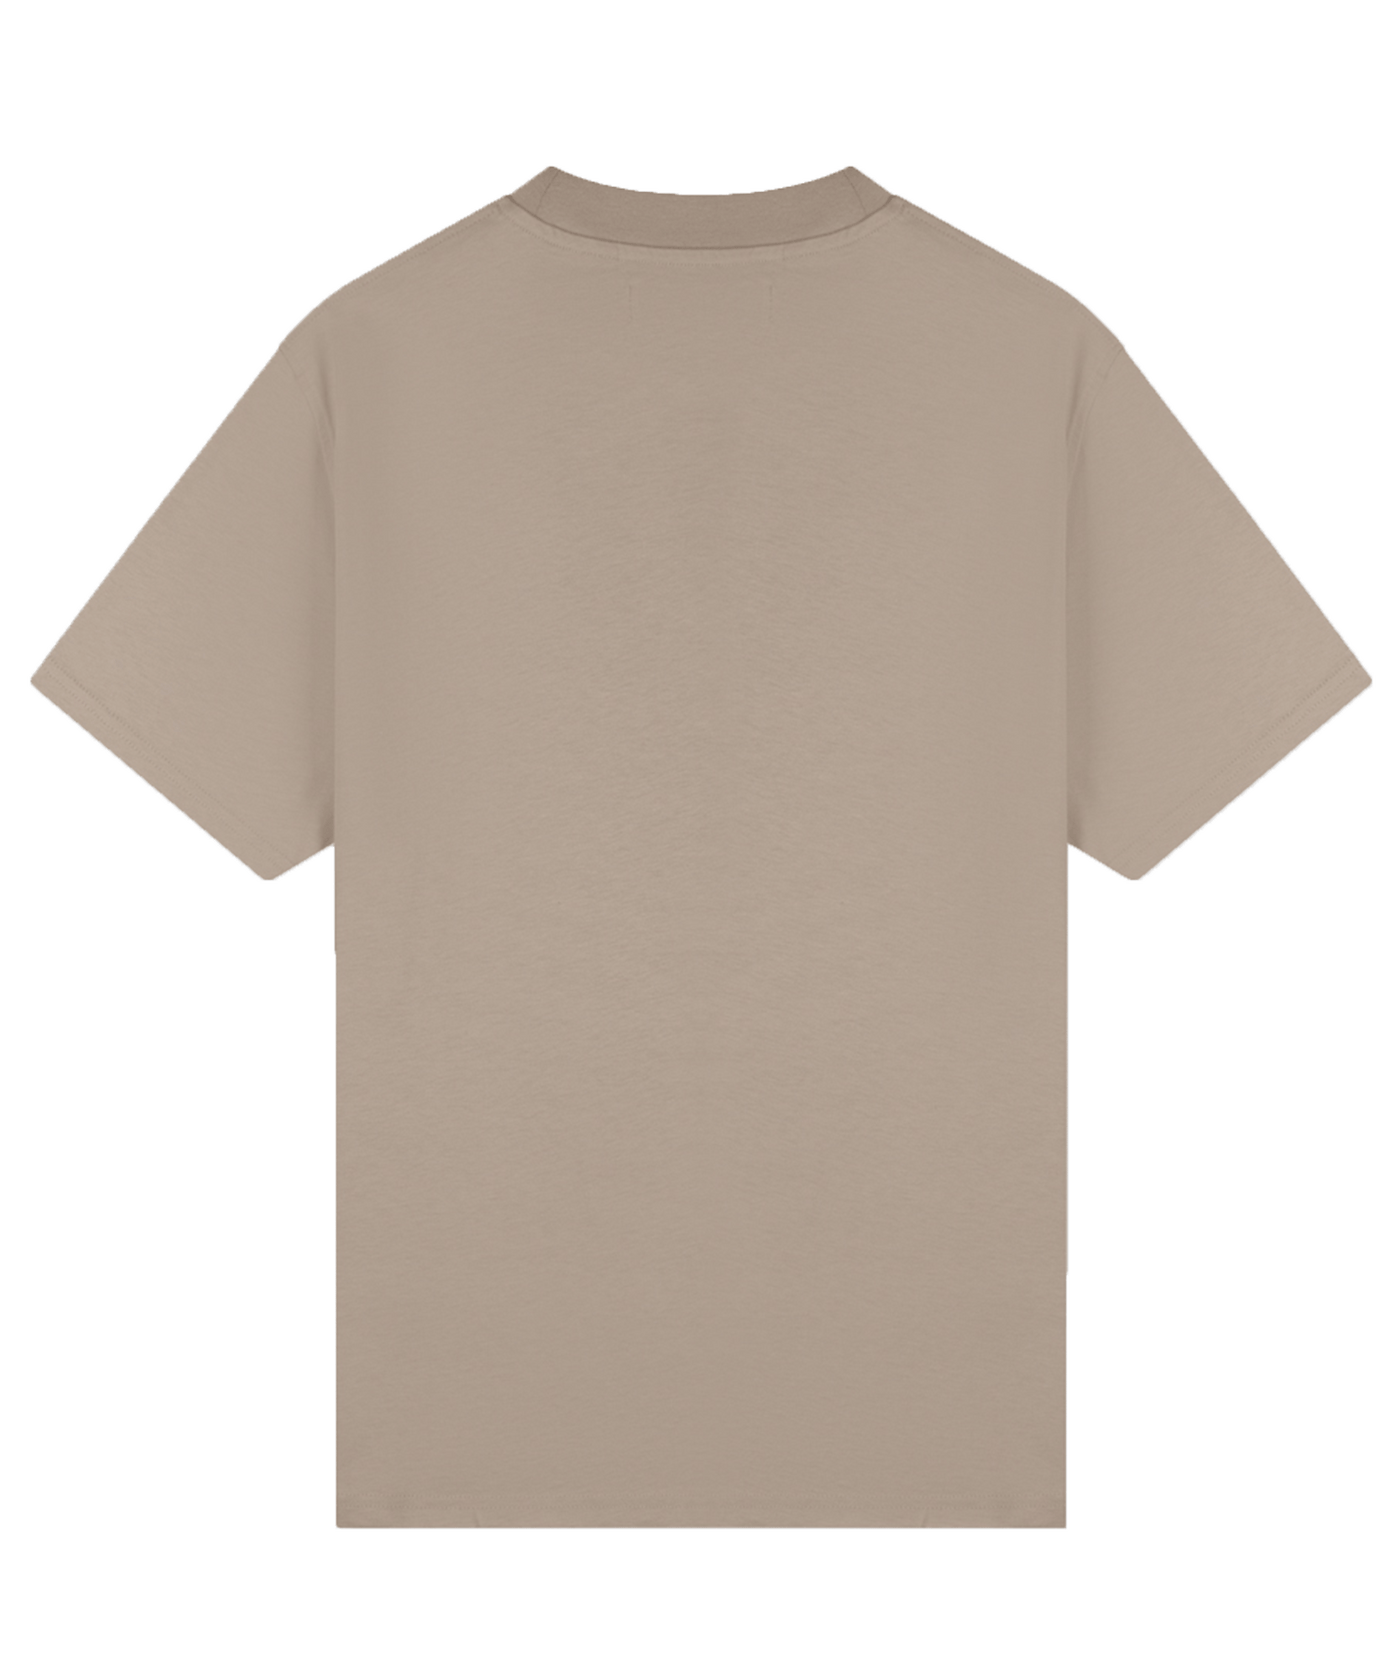 CROYEZ - Thermal Flamingo - T-shirt - Khaki